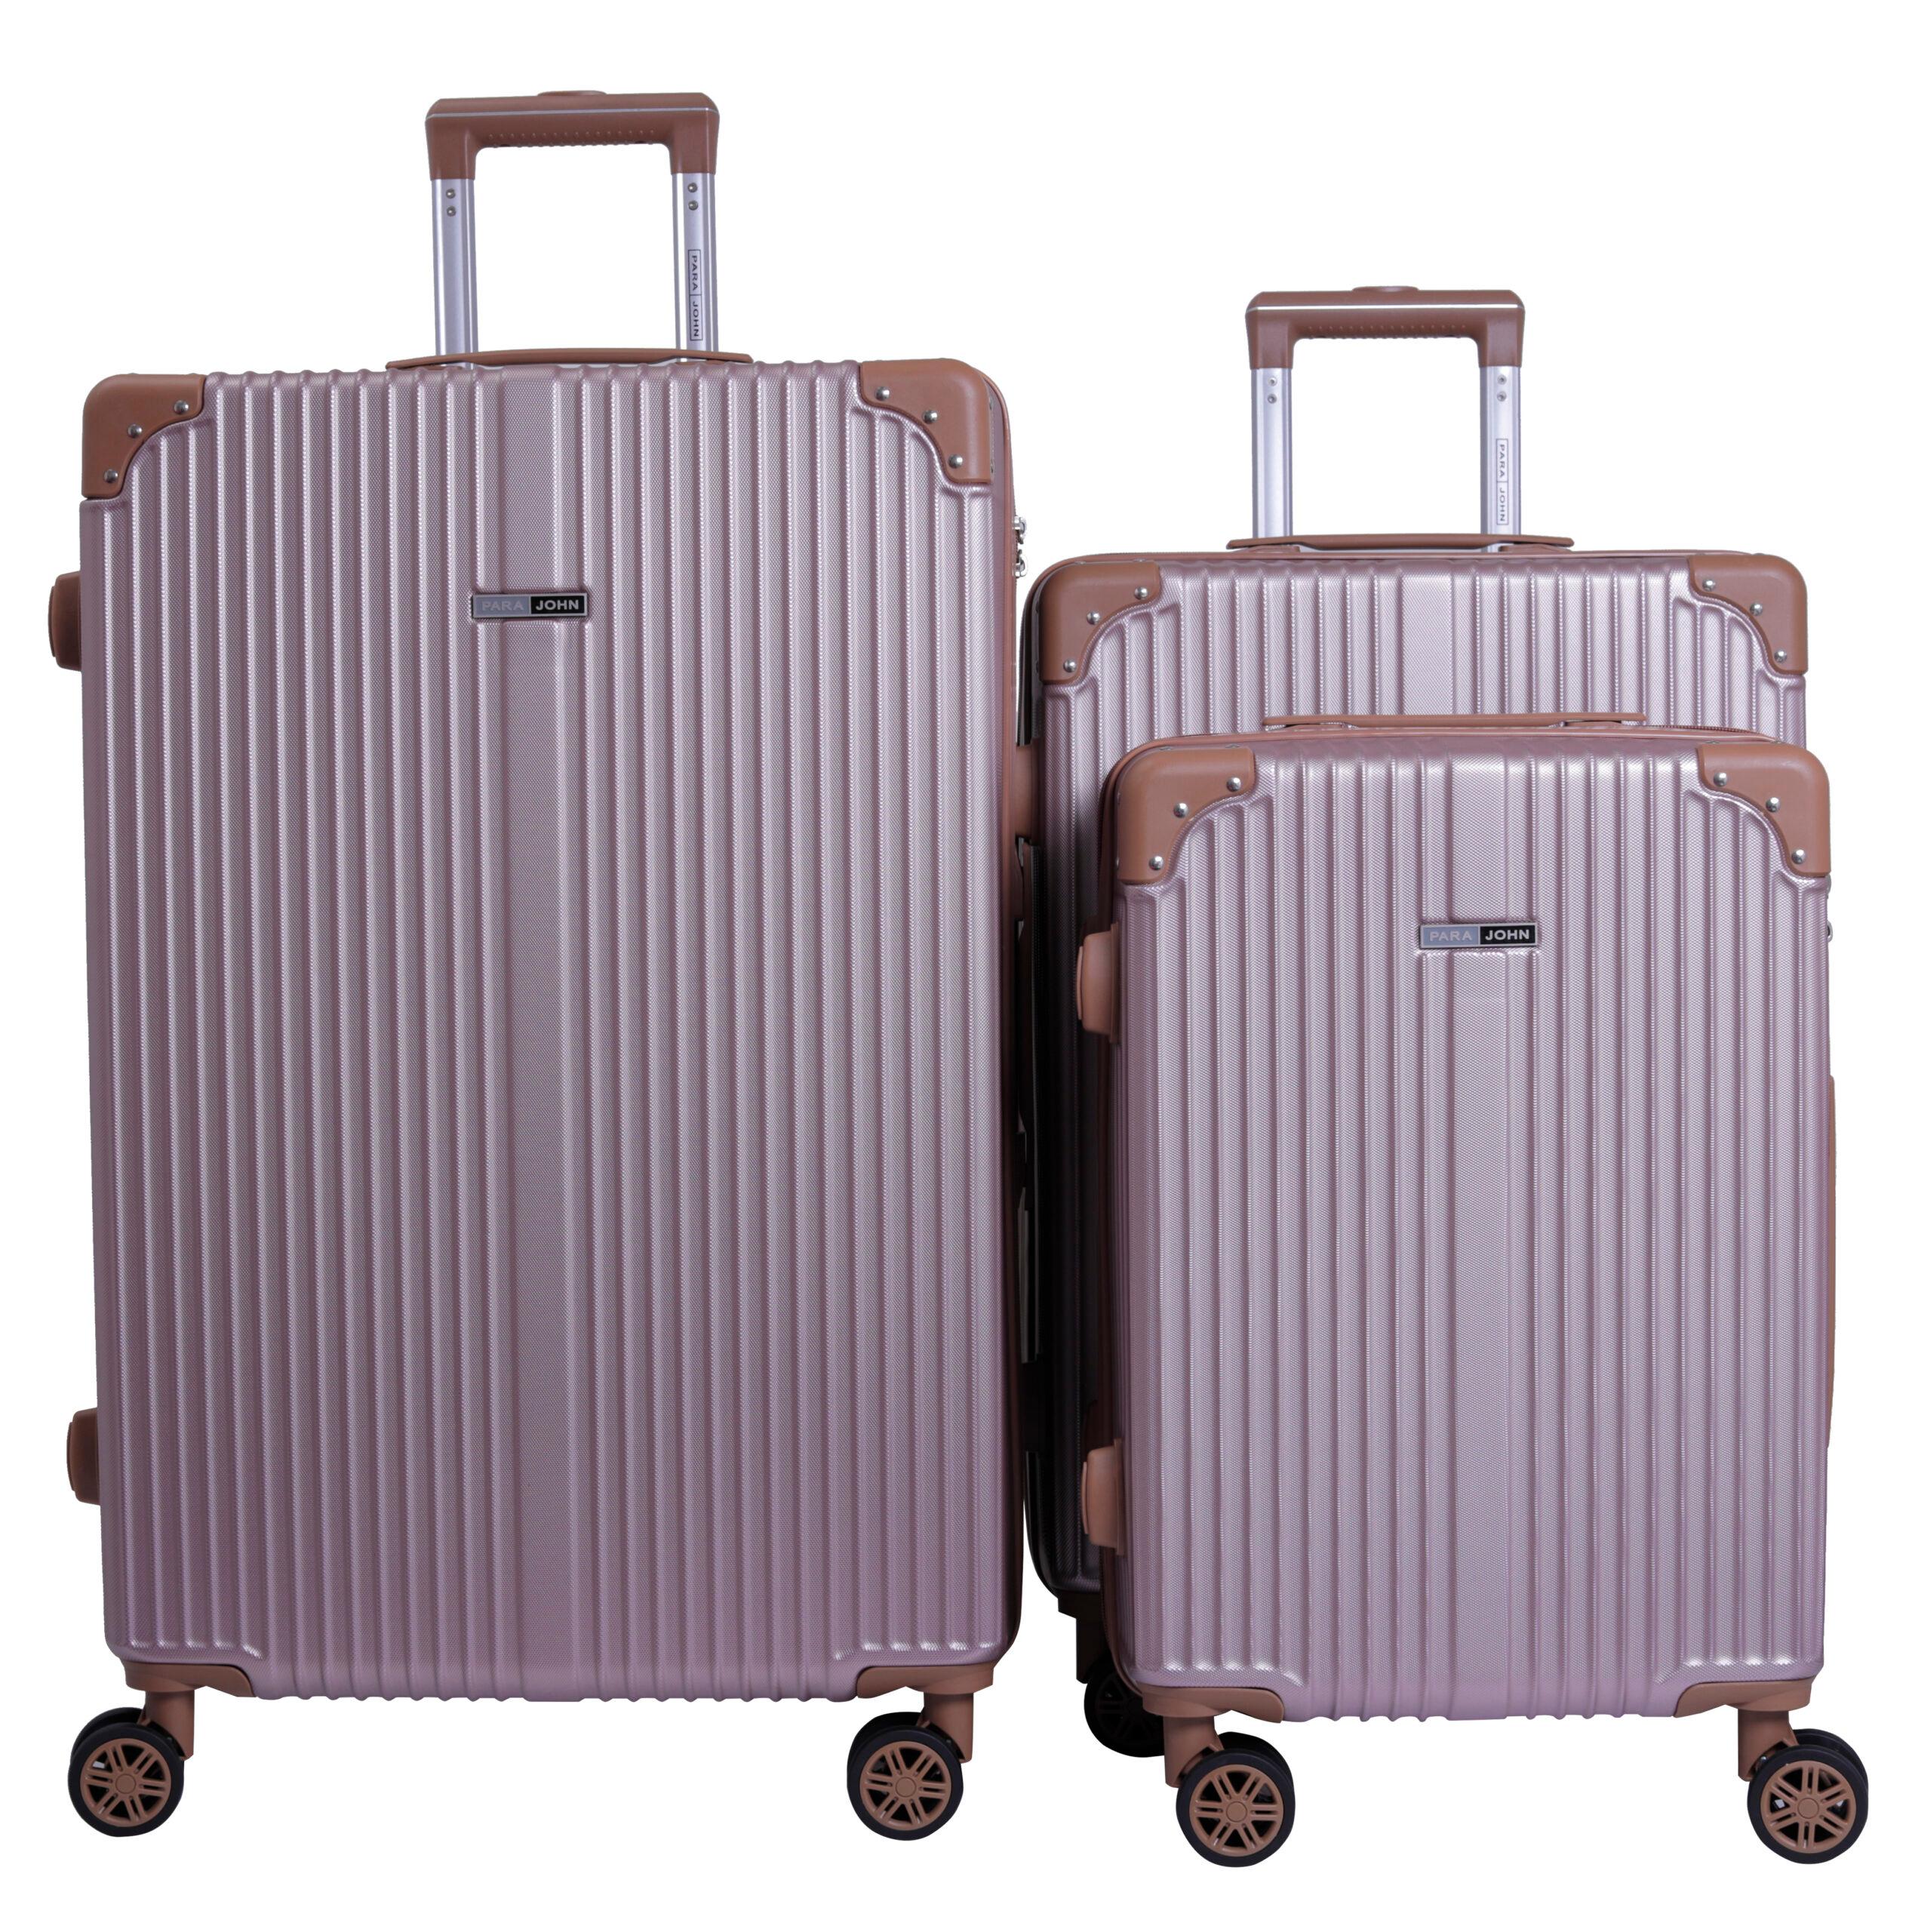 طقم حقائب سفر 3 حقائب بعجلات دوارة (20 ، 24 ، 28) بوصة مادة PP بني فاتح PARA JOHN - Travel Luggage Suitcase Set of 3 - Trolley Bag, Carry On Hand Cabin Luggage Bag - Lightweight (20 ، 24 ، 28) inch